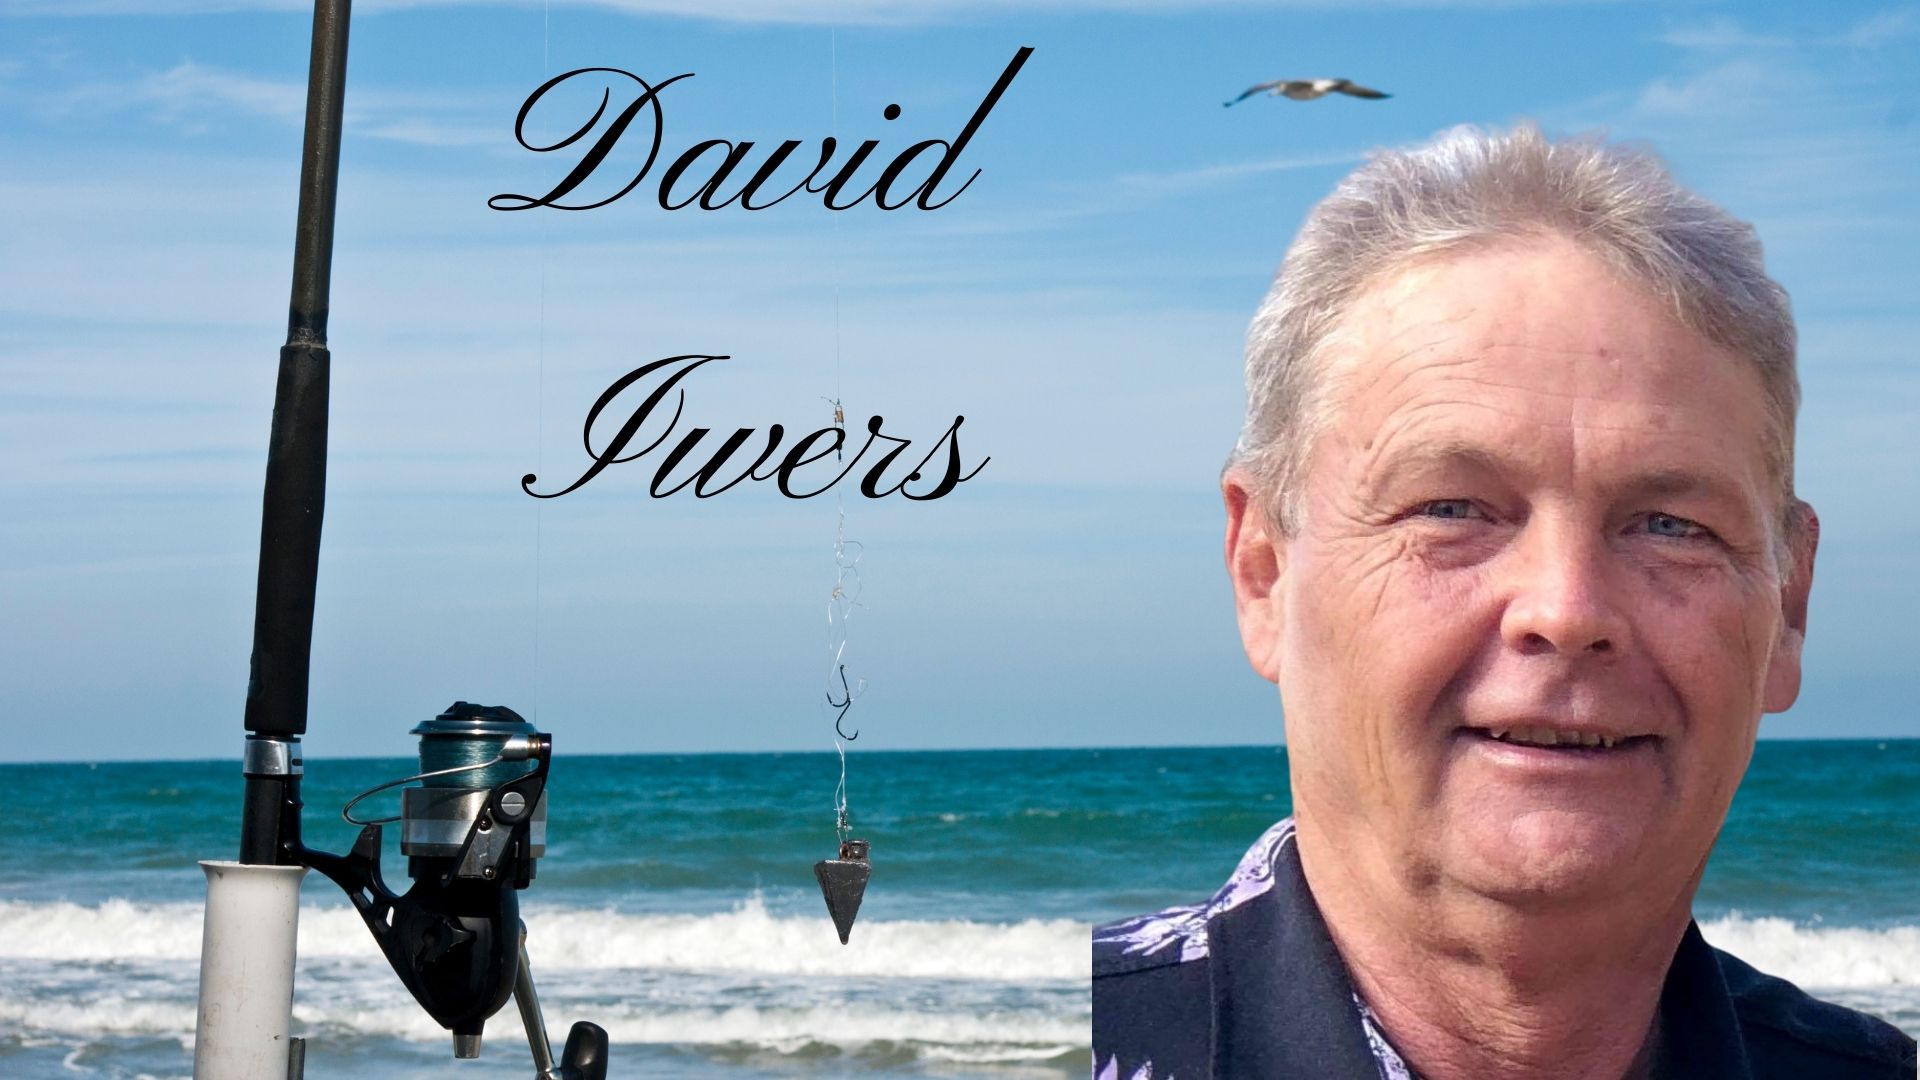 David John Iwers